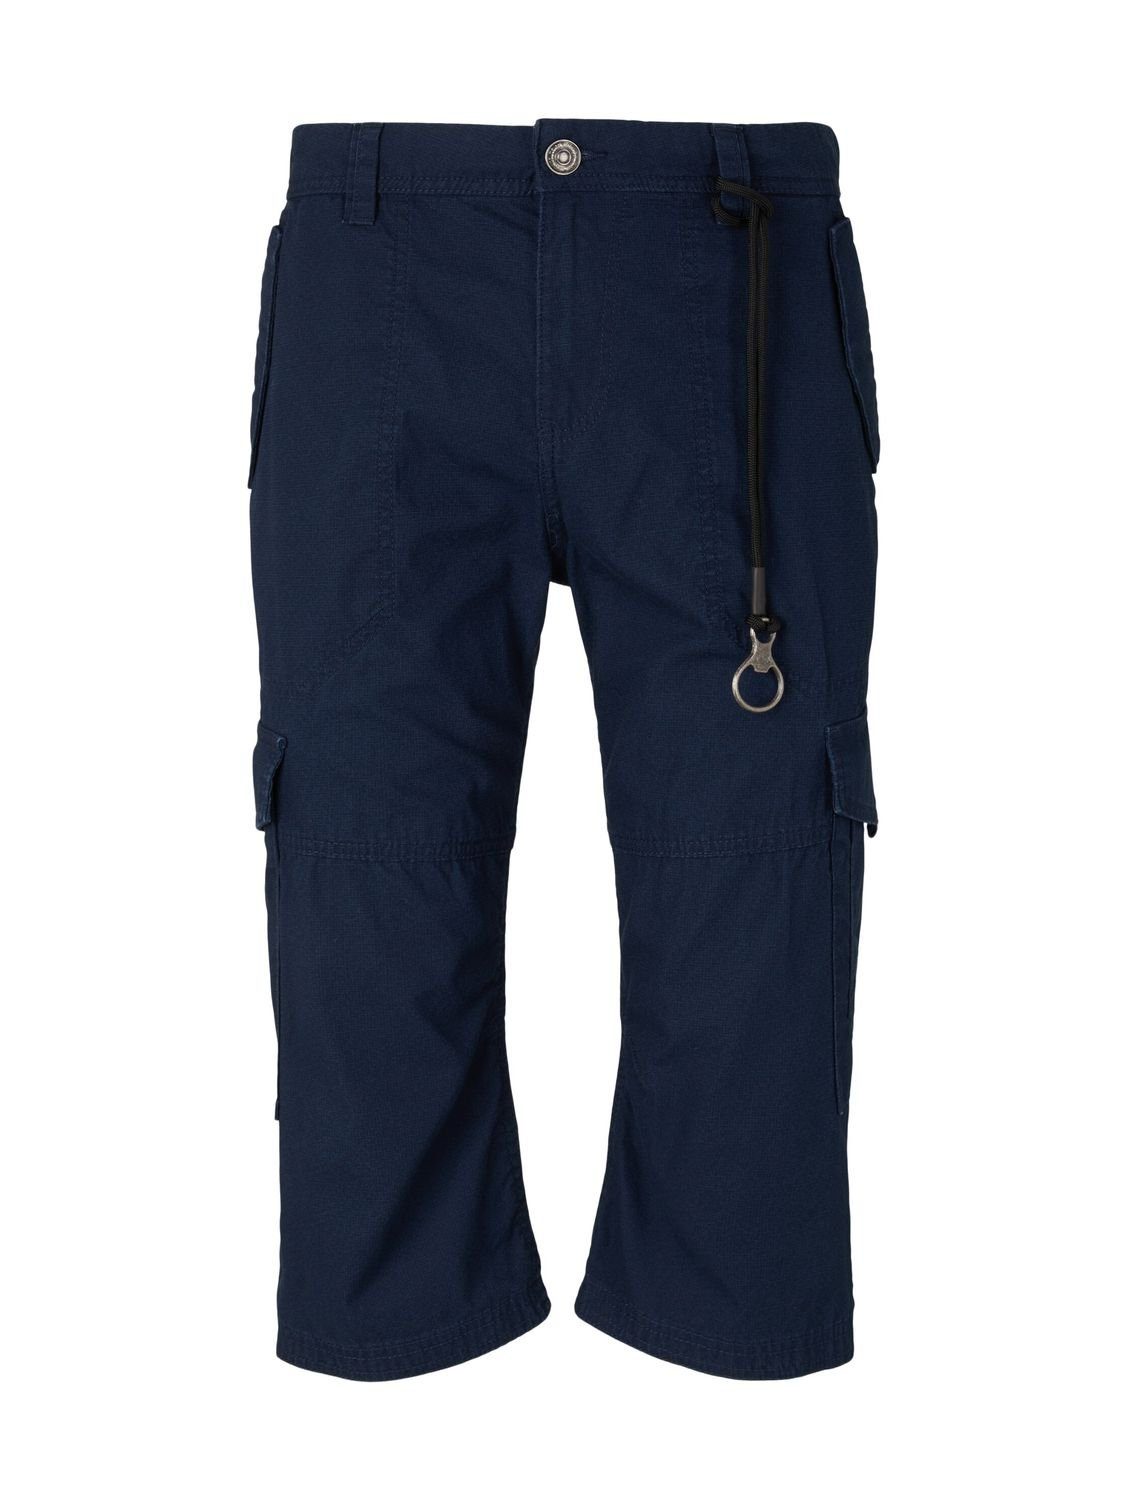 TOM TAILOR aus Minimal MAX Design Shorts OVERKNEE 29122 Navy Baumwolle